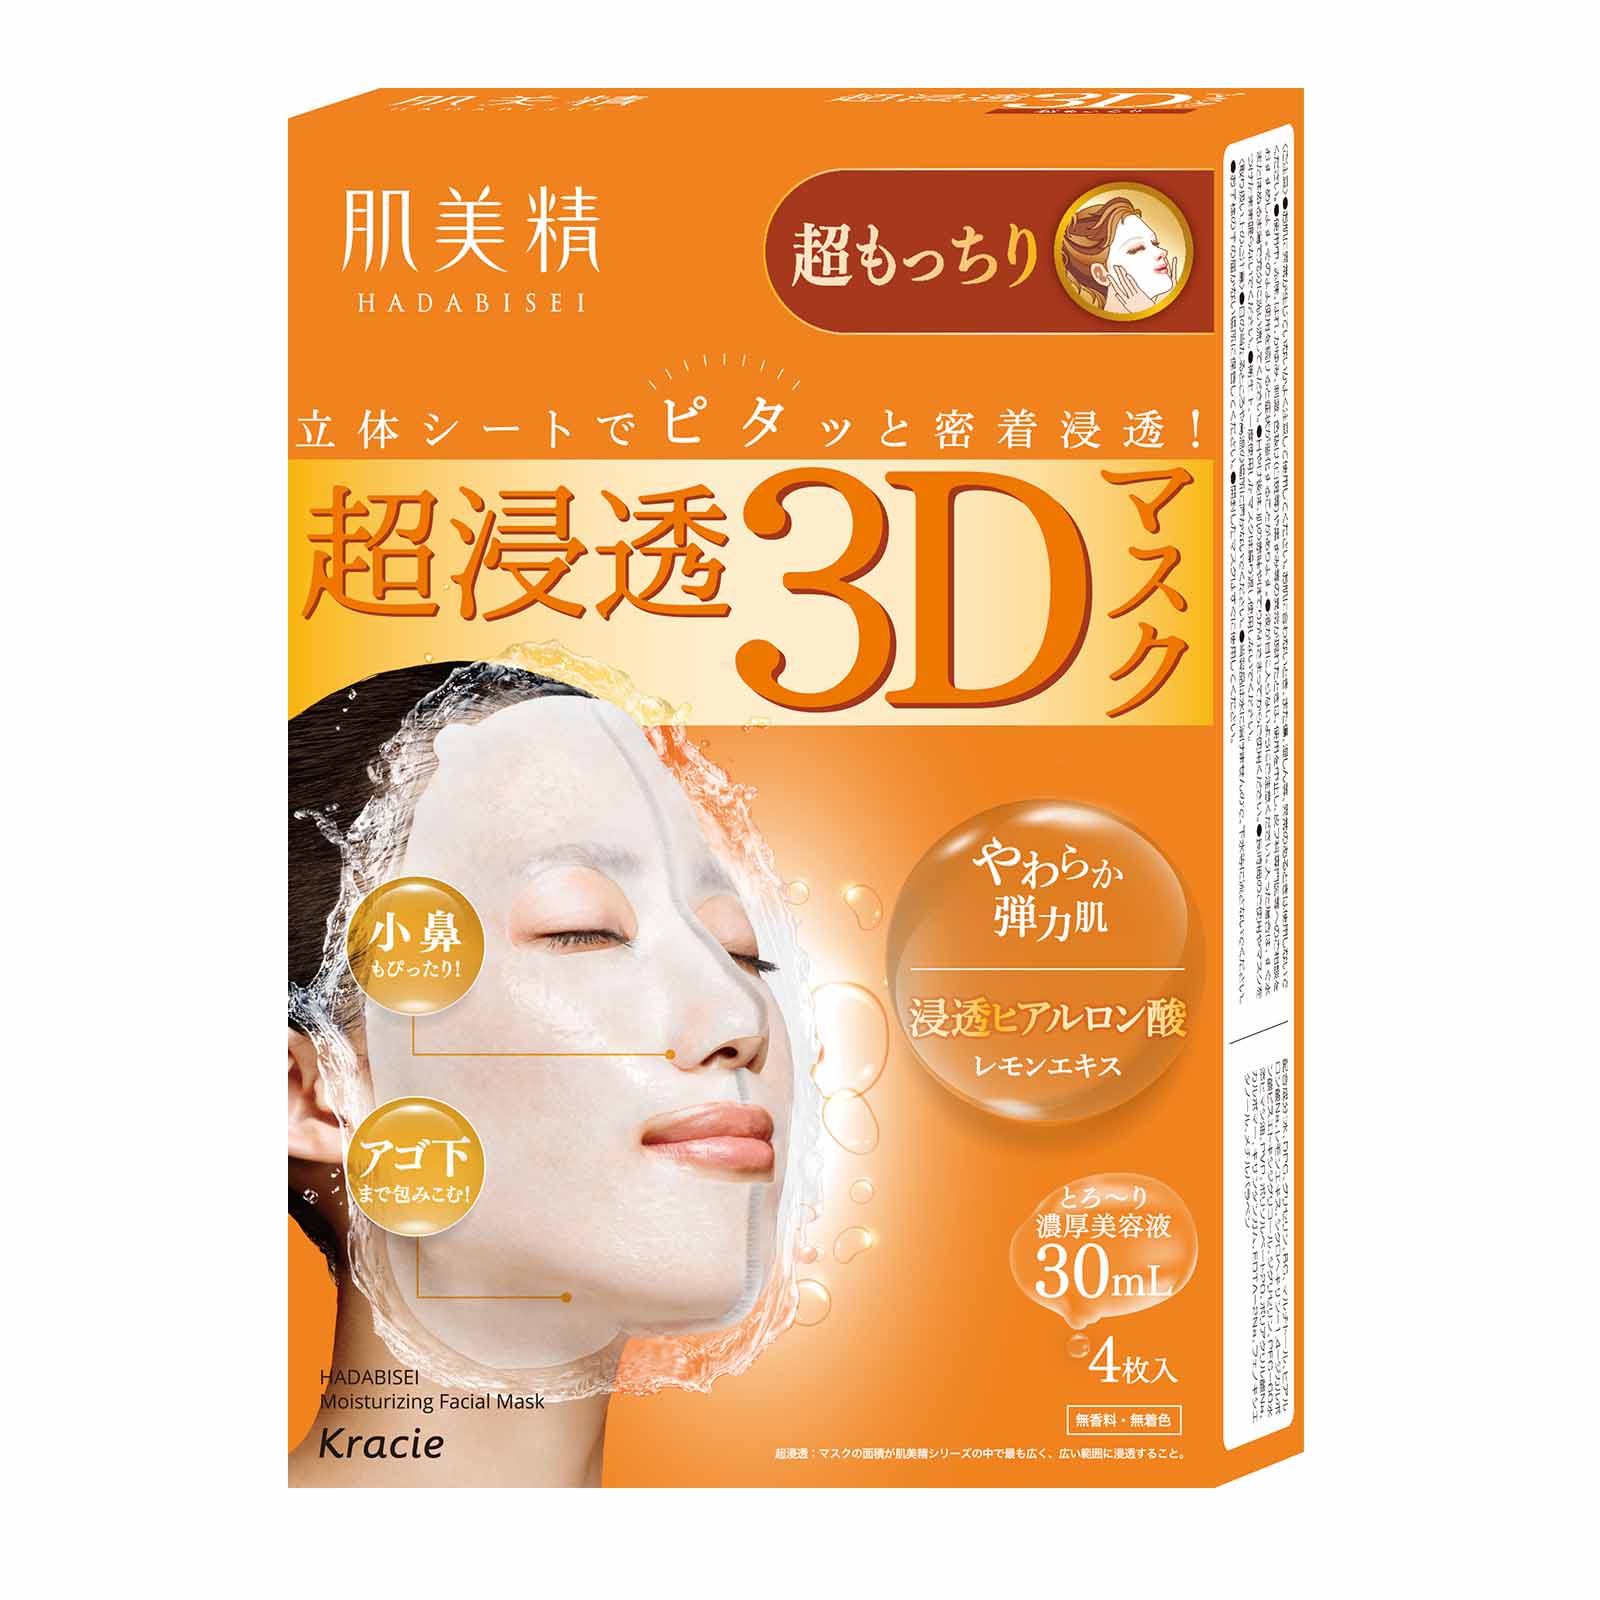 Kracie Hadabisei 3D Facial Mask (Super Supple)